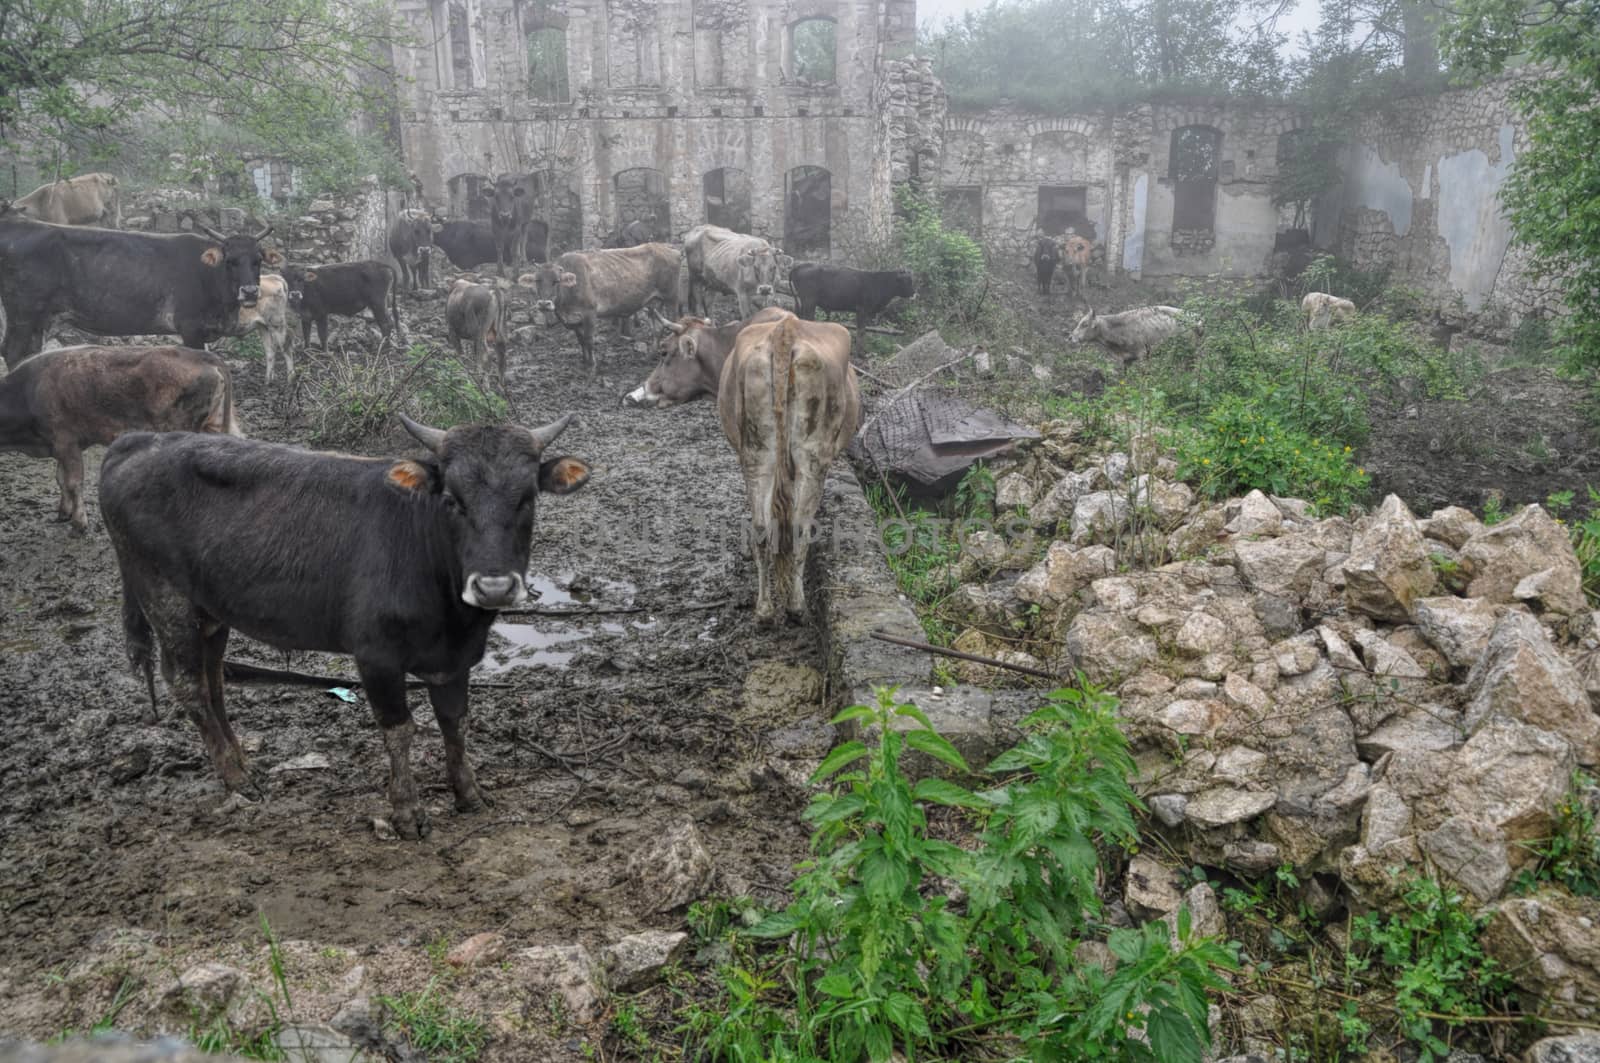 Livestock in Karabakh by MichalKnitl